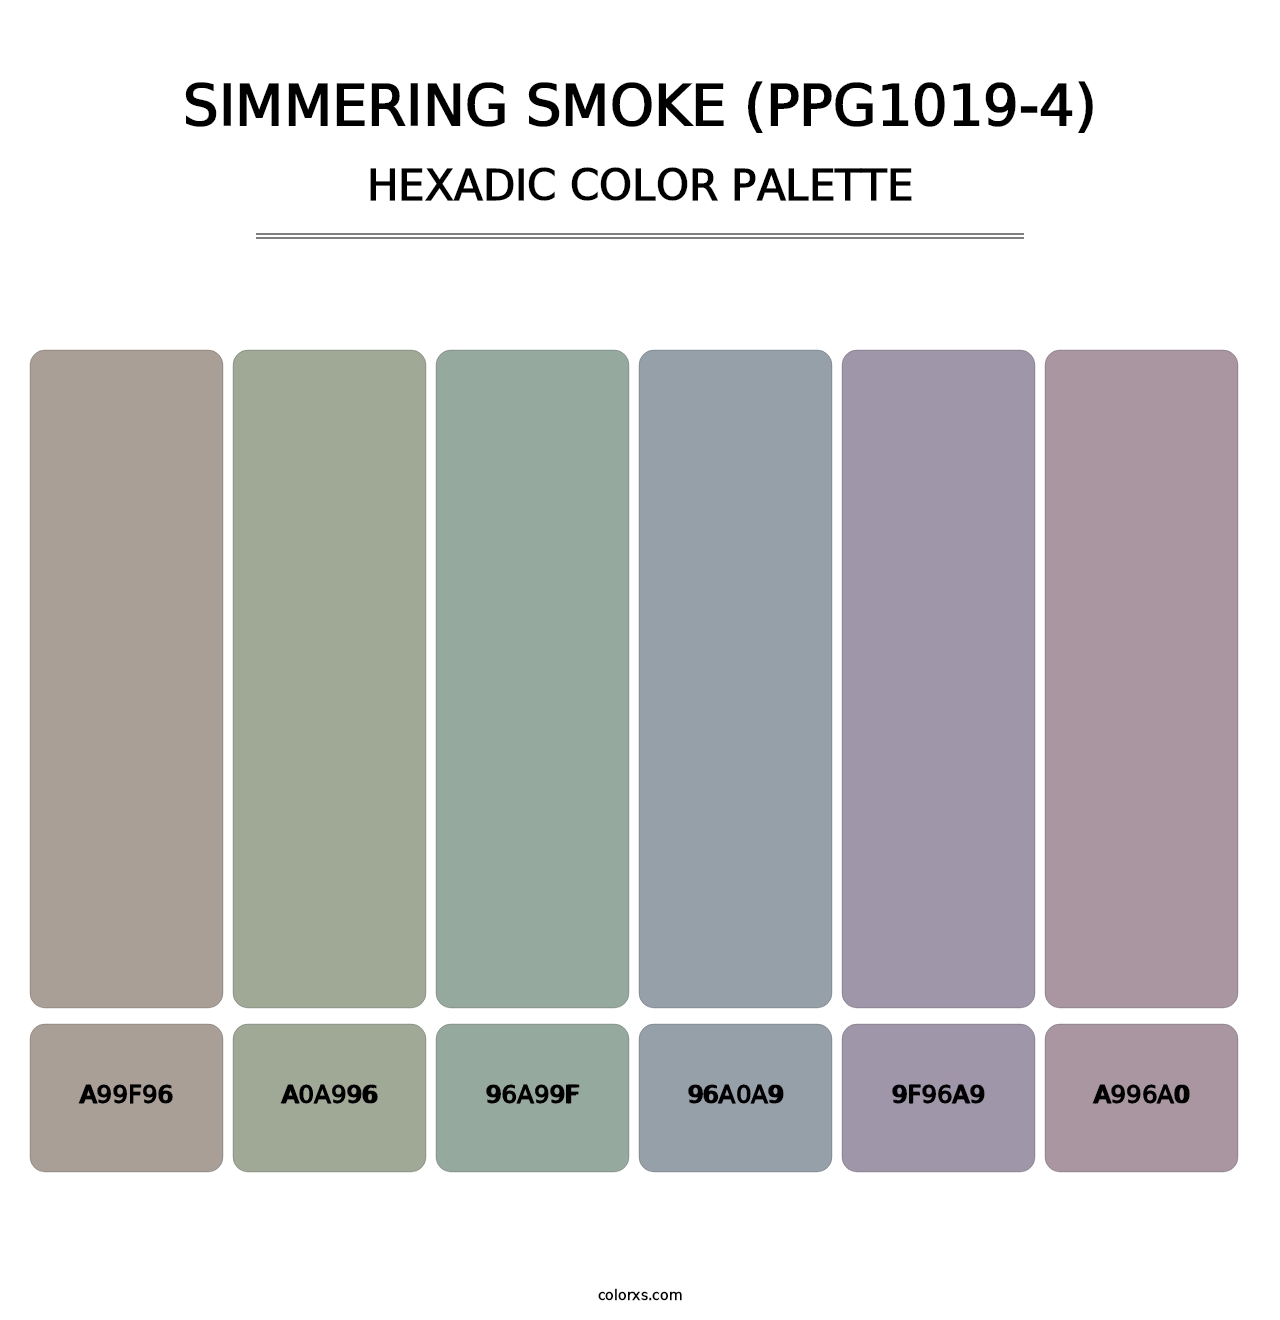 Simmering Smoke (PPG1019-4) - Hexadic Color Palette